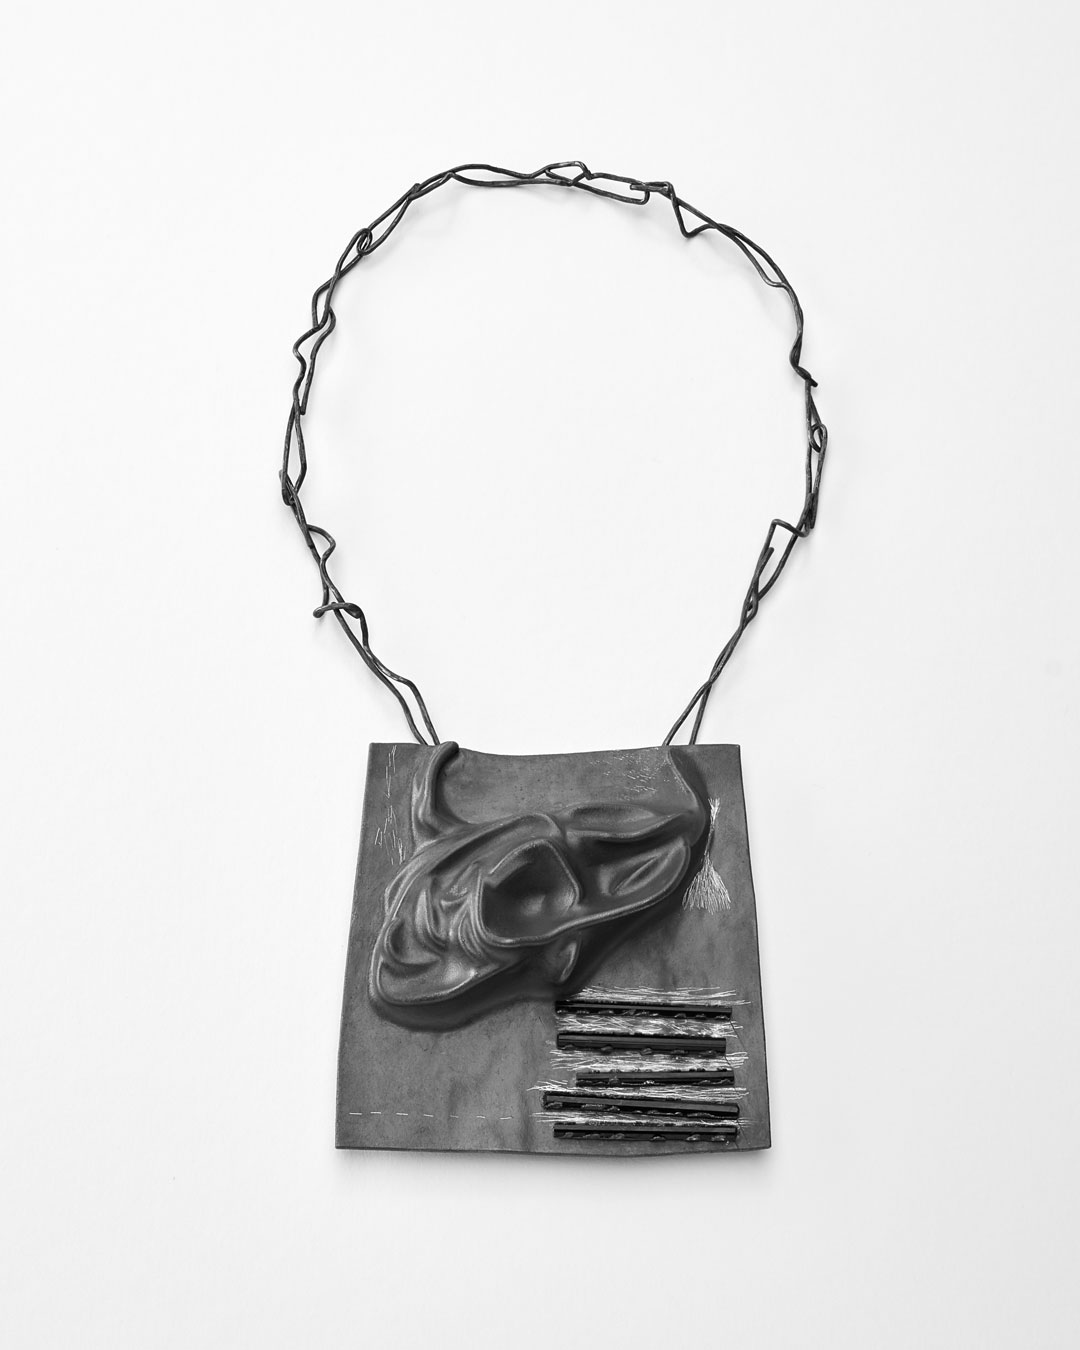 Iris Bodemer, Klang 2 (Sound 2), 2019, pendant; silver, thermoplastic, tourmaline, 100 x 100 x 20 mm, €4000